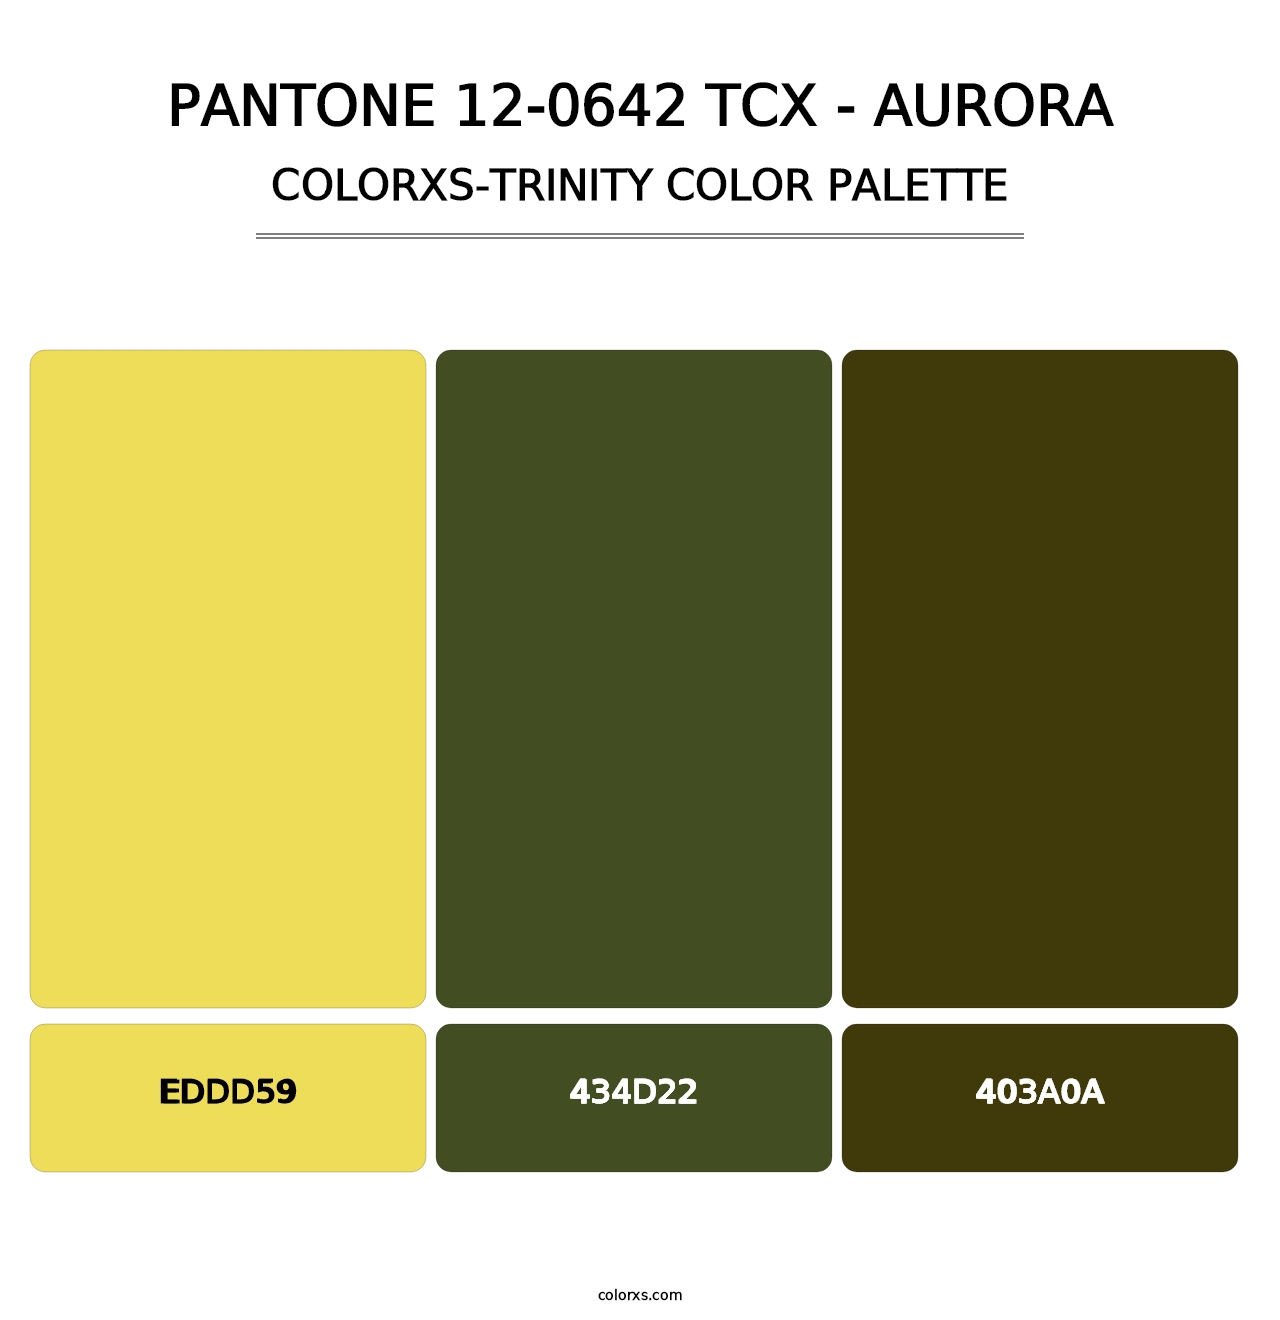 PANTONE 12-0642 TCX - Aurora - Colorxs Trinity Palette